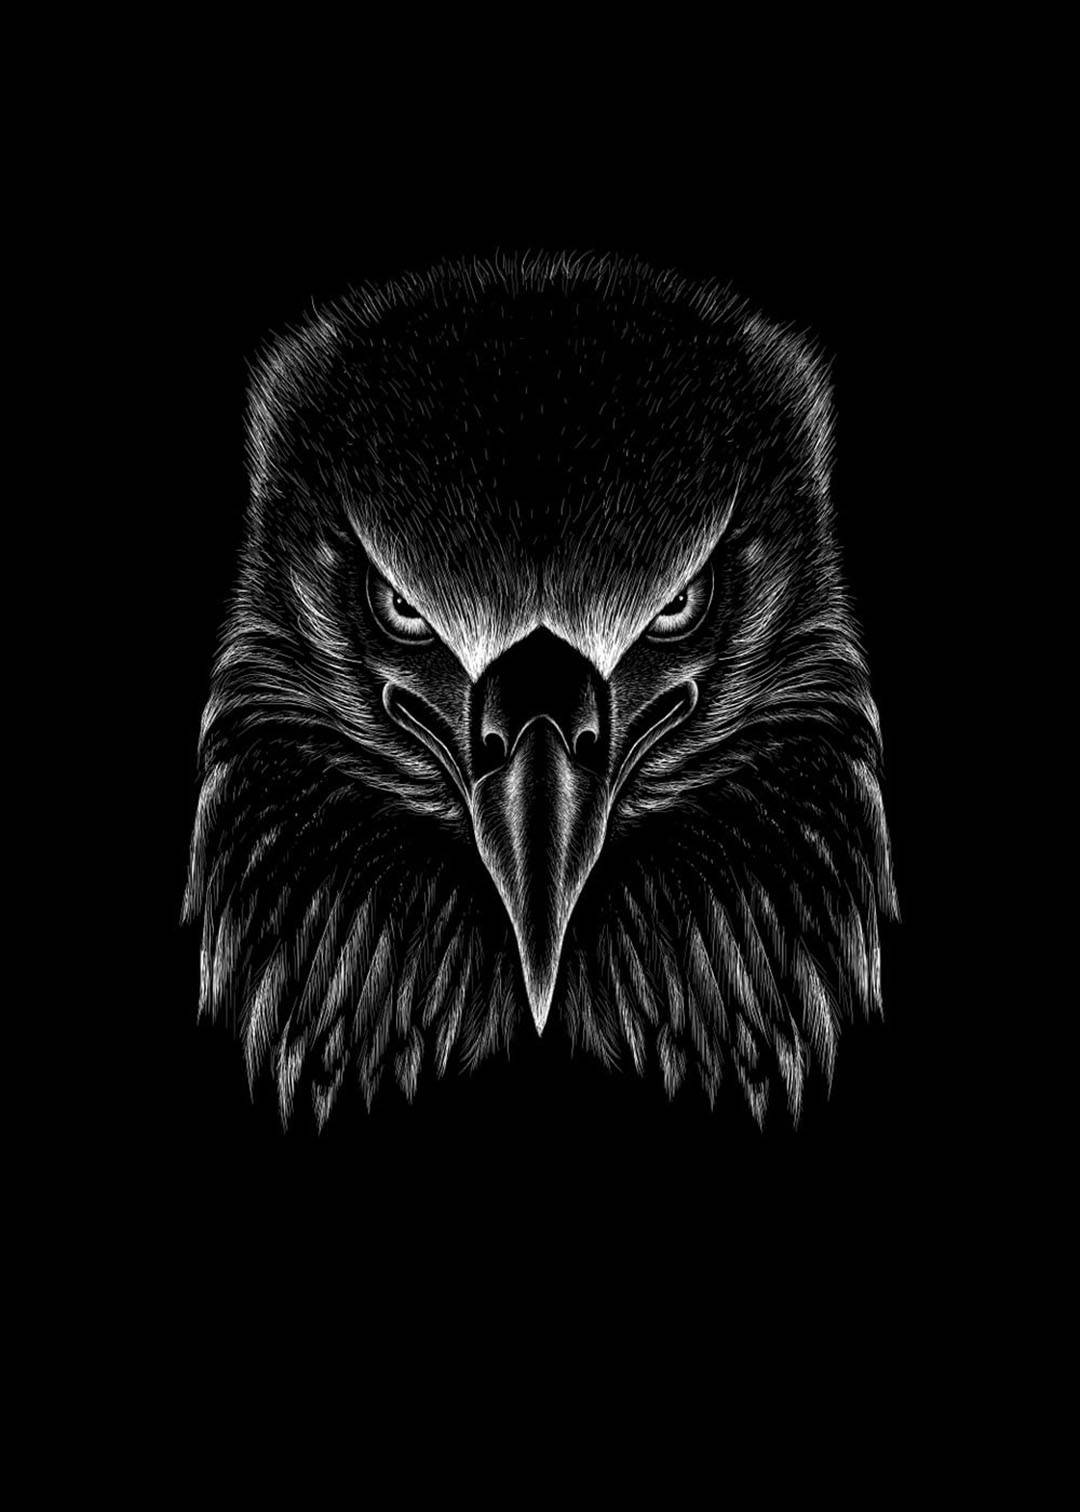 Dark Android Fierce Eagle Eyes Background